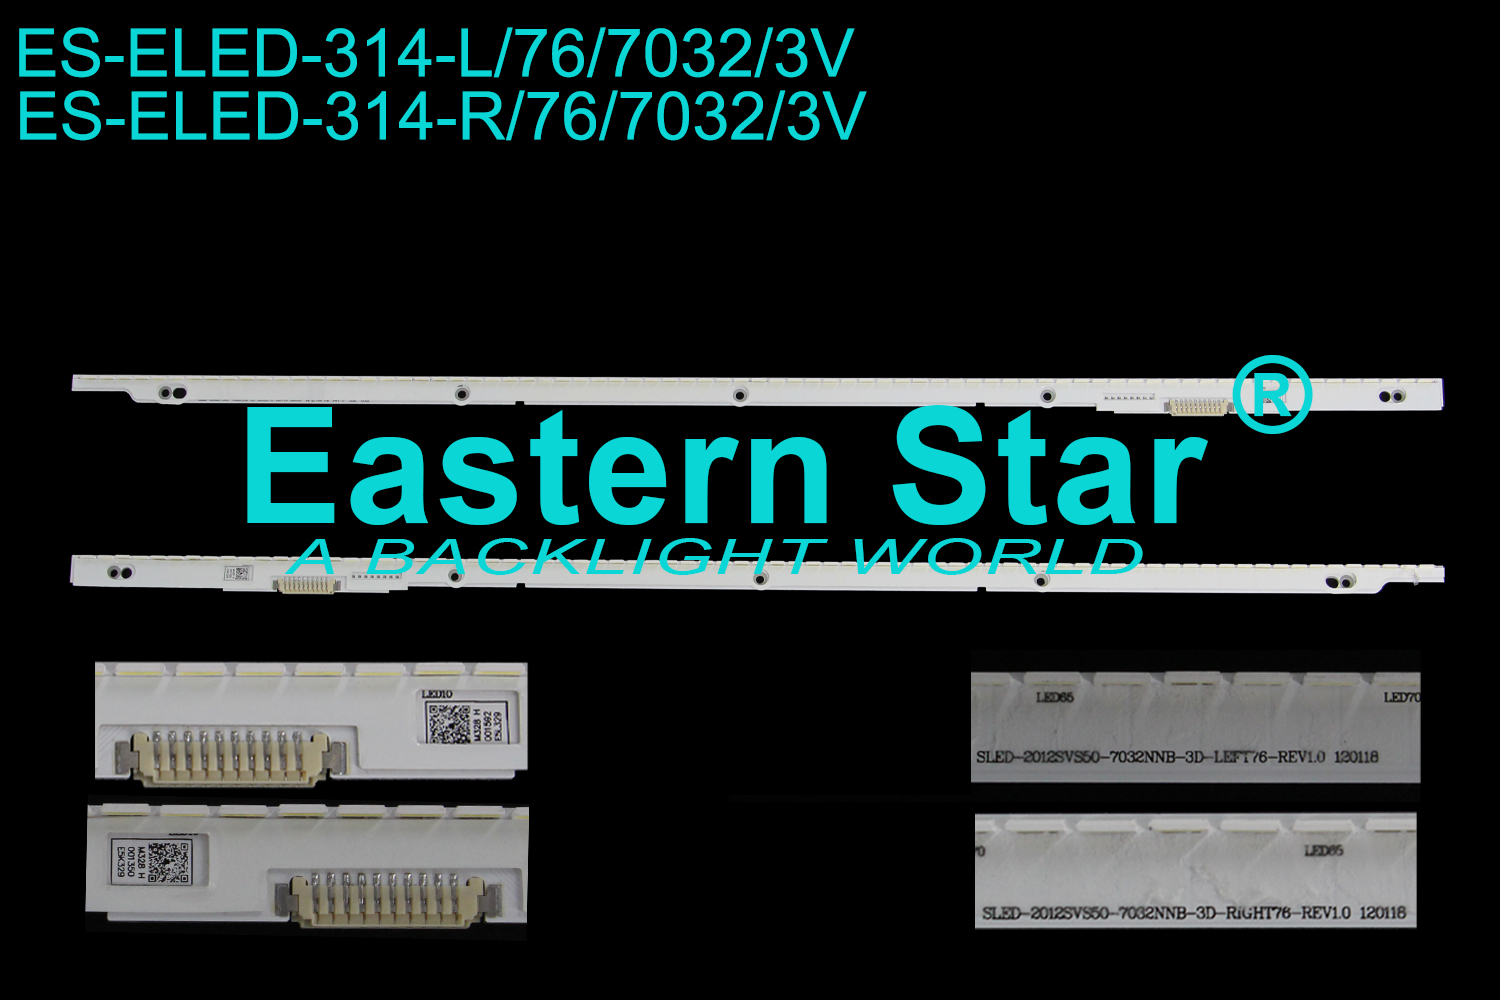 ES-ELED-314 ELED/EDGE TV backlight use for 50'' Samsung SLED-2012SVS50-7032NNB-3D-RIGHT76-TRV1.0 120118 LED STRIPS(2)